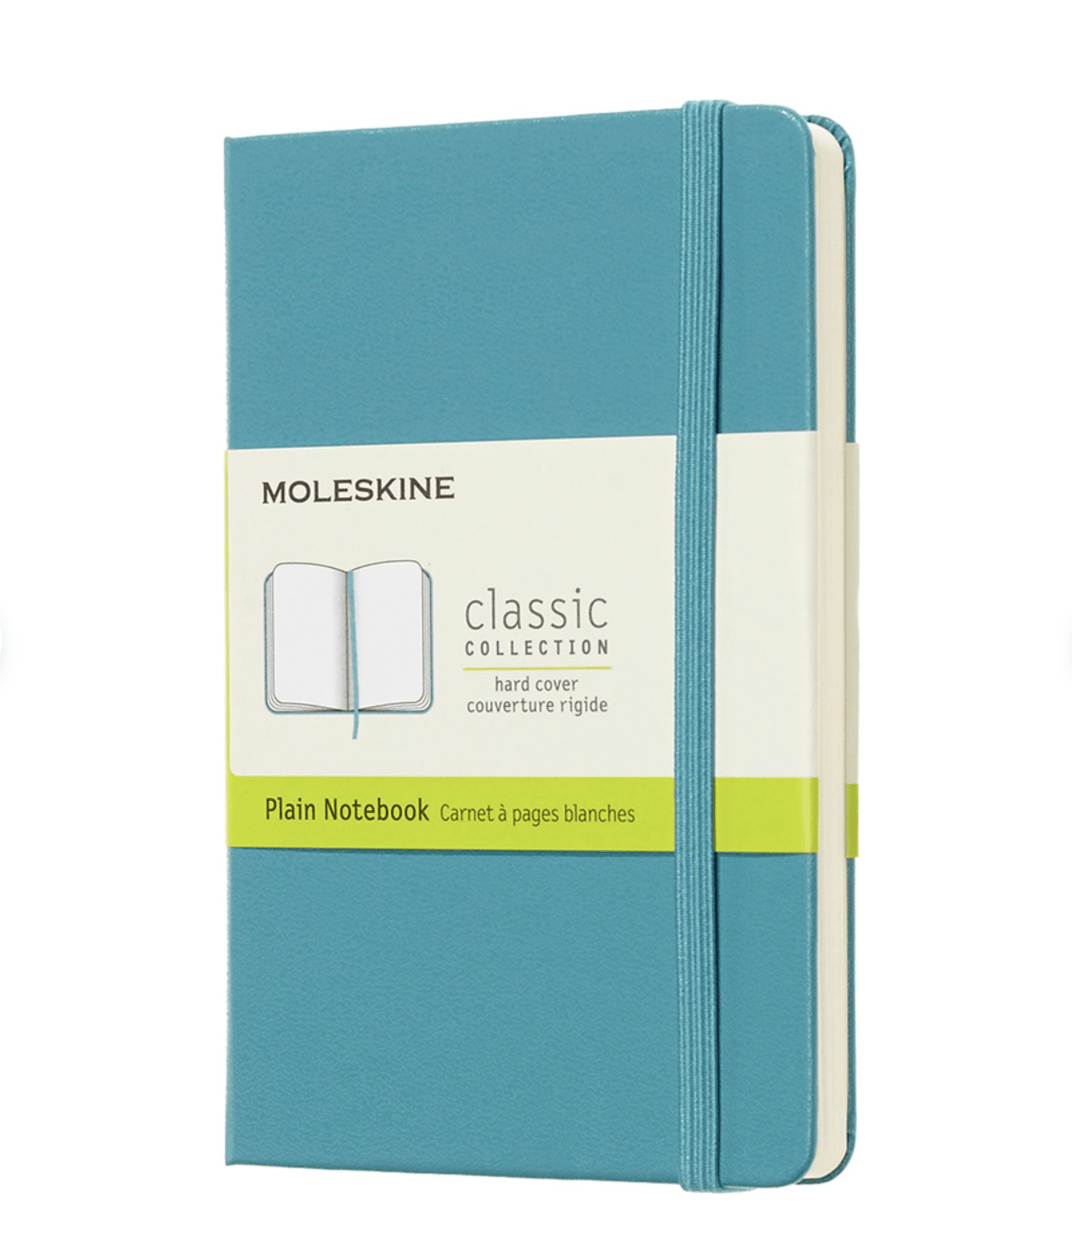 Moleskine Notebook Large / Reef Blue Moleskine Classic Notebook Hard Cover - Plain